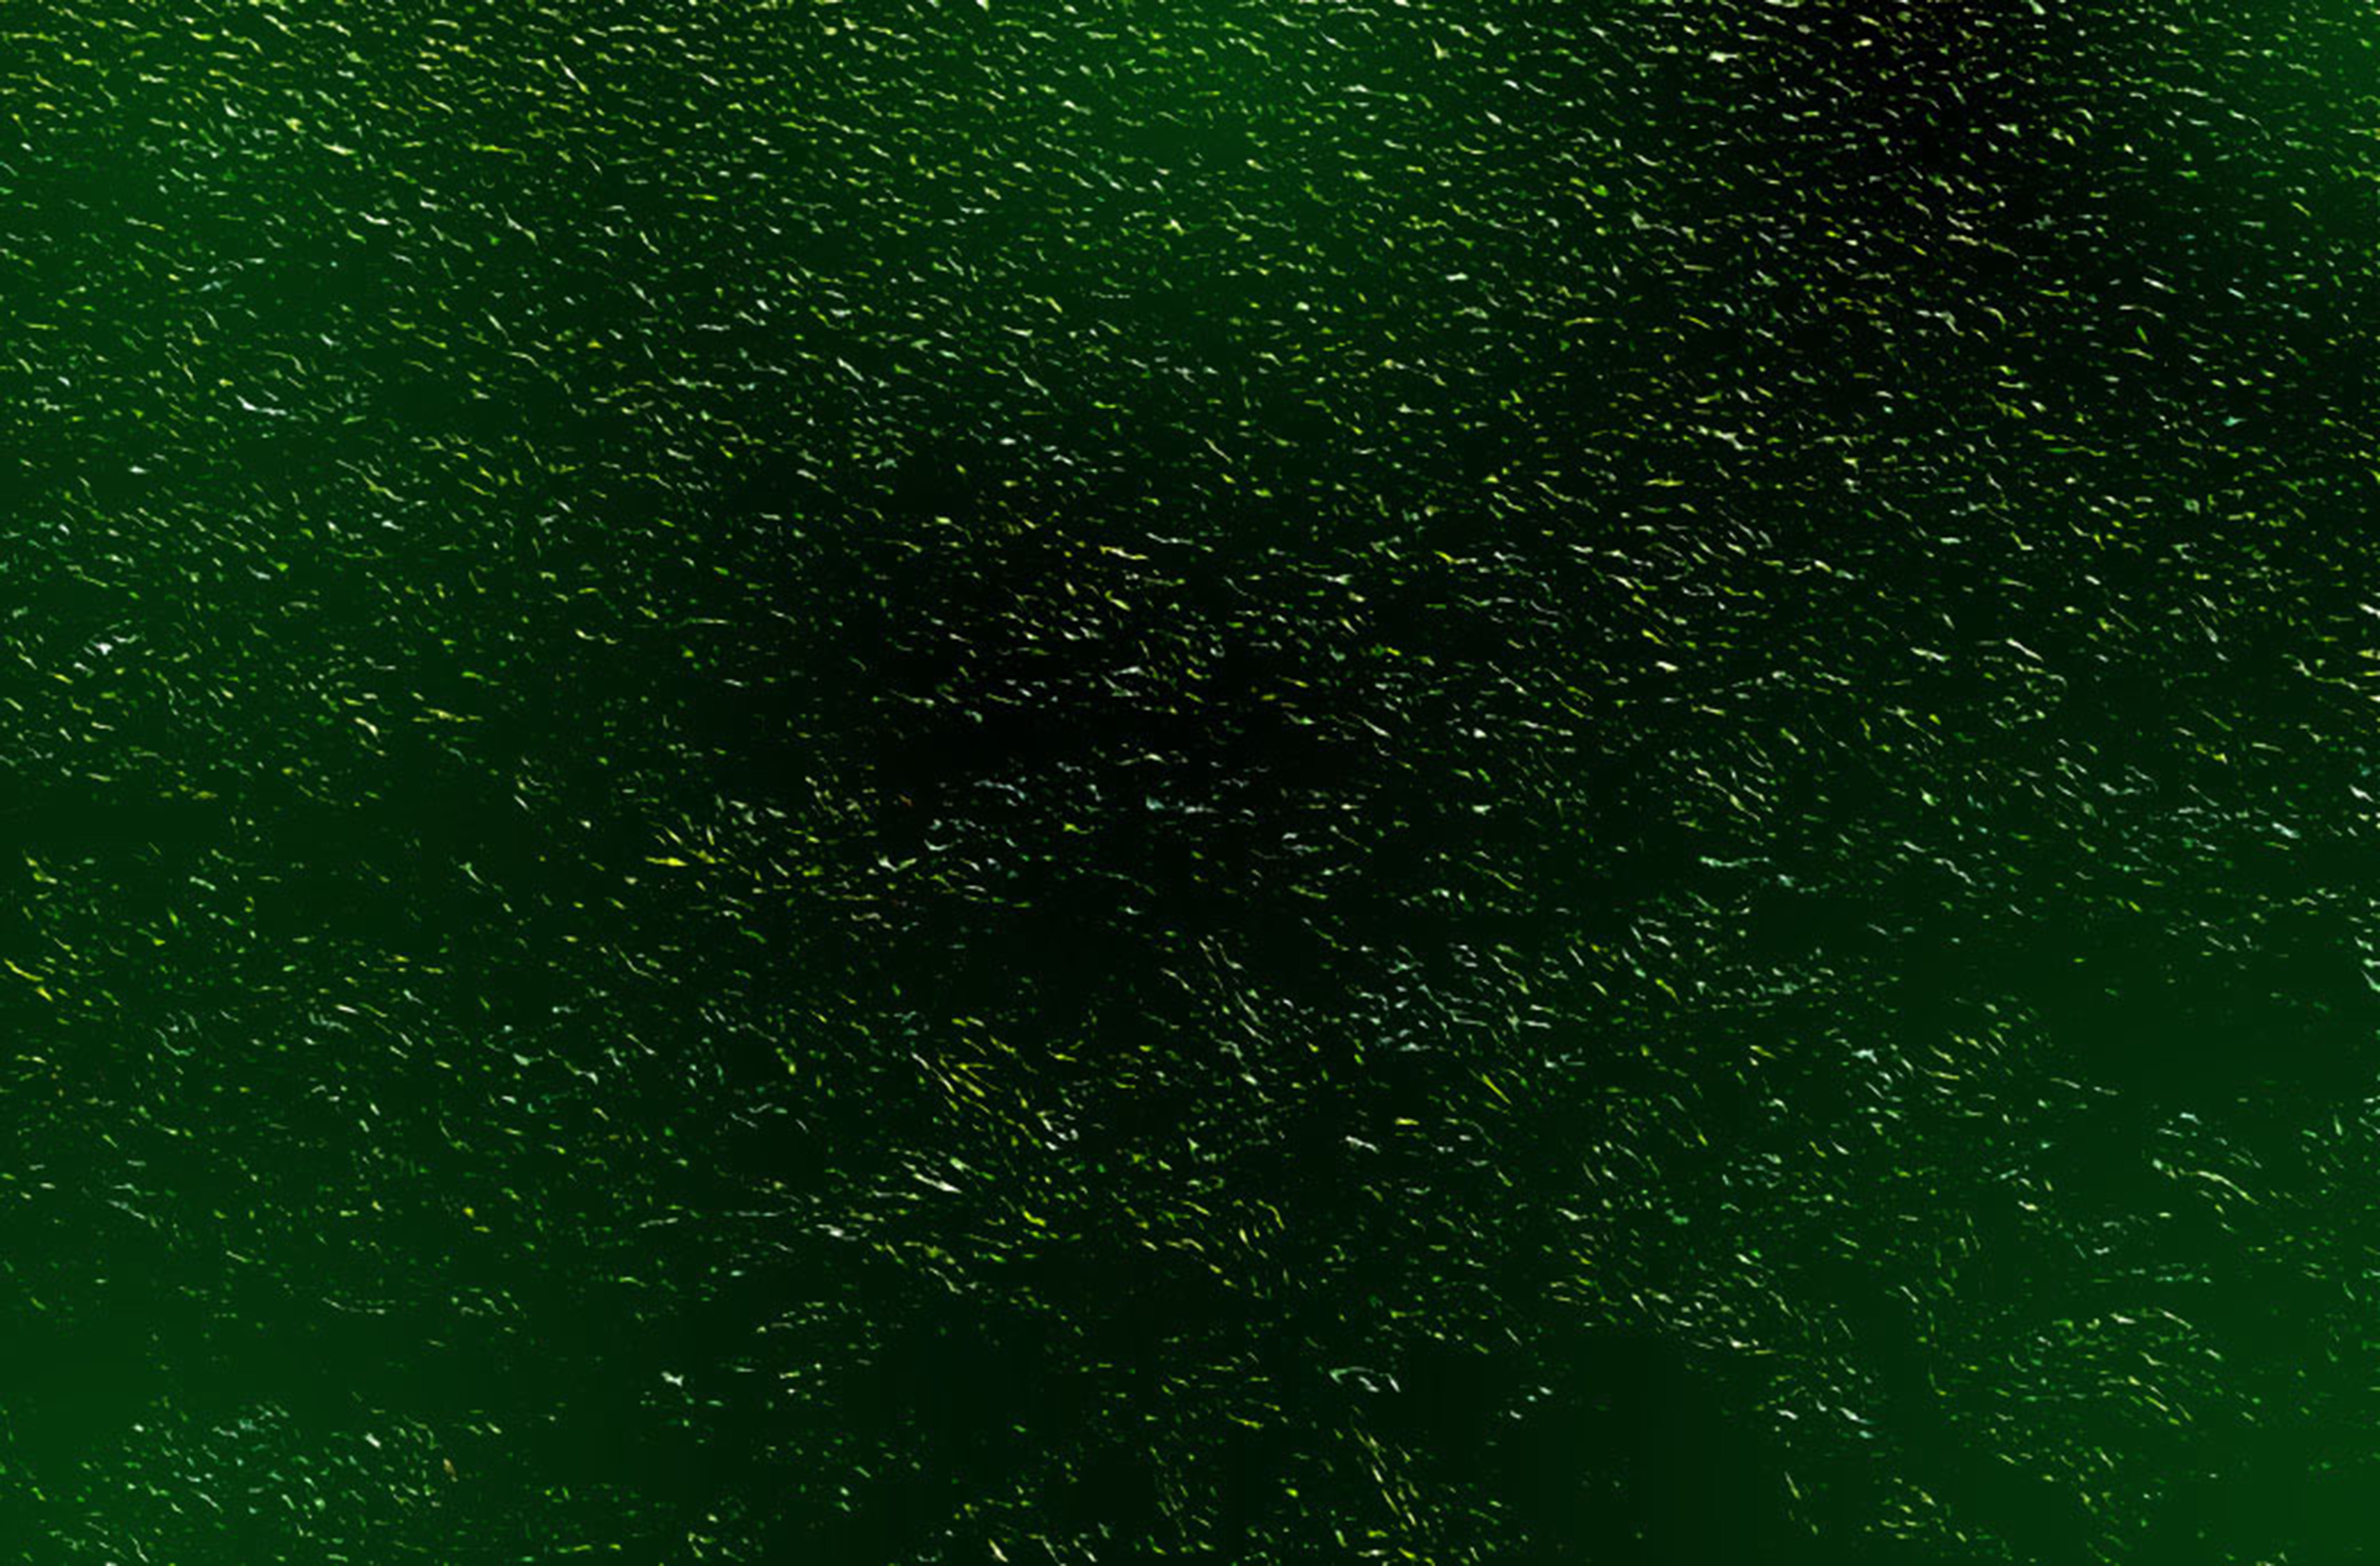 Abstract dark green & black background free photo